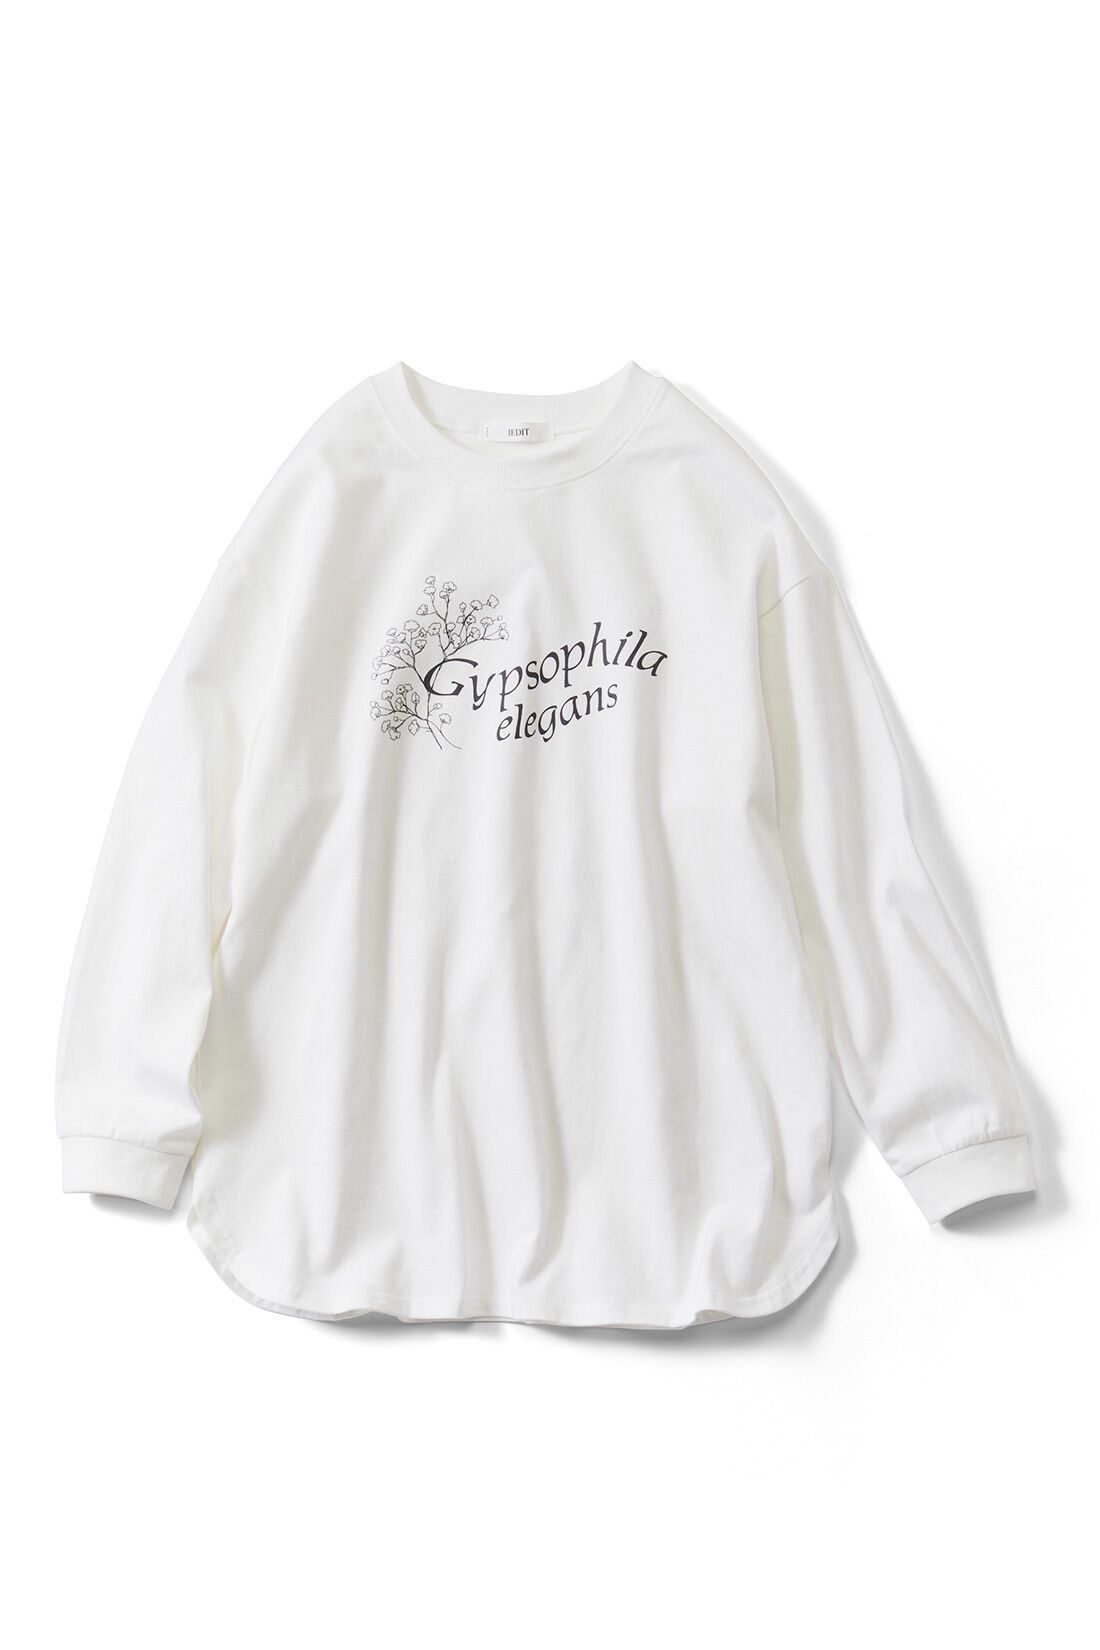 IEDIT|Live love cotton（R）プロジェクト IEDIT[イディット]　大人のためのモノトーンフラワーロゴプリントTシャツの会|カスミ草 『幸福、清らかな心』 そっとしあわせを願う想いを白く小さい可憐な花に込めて。